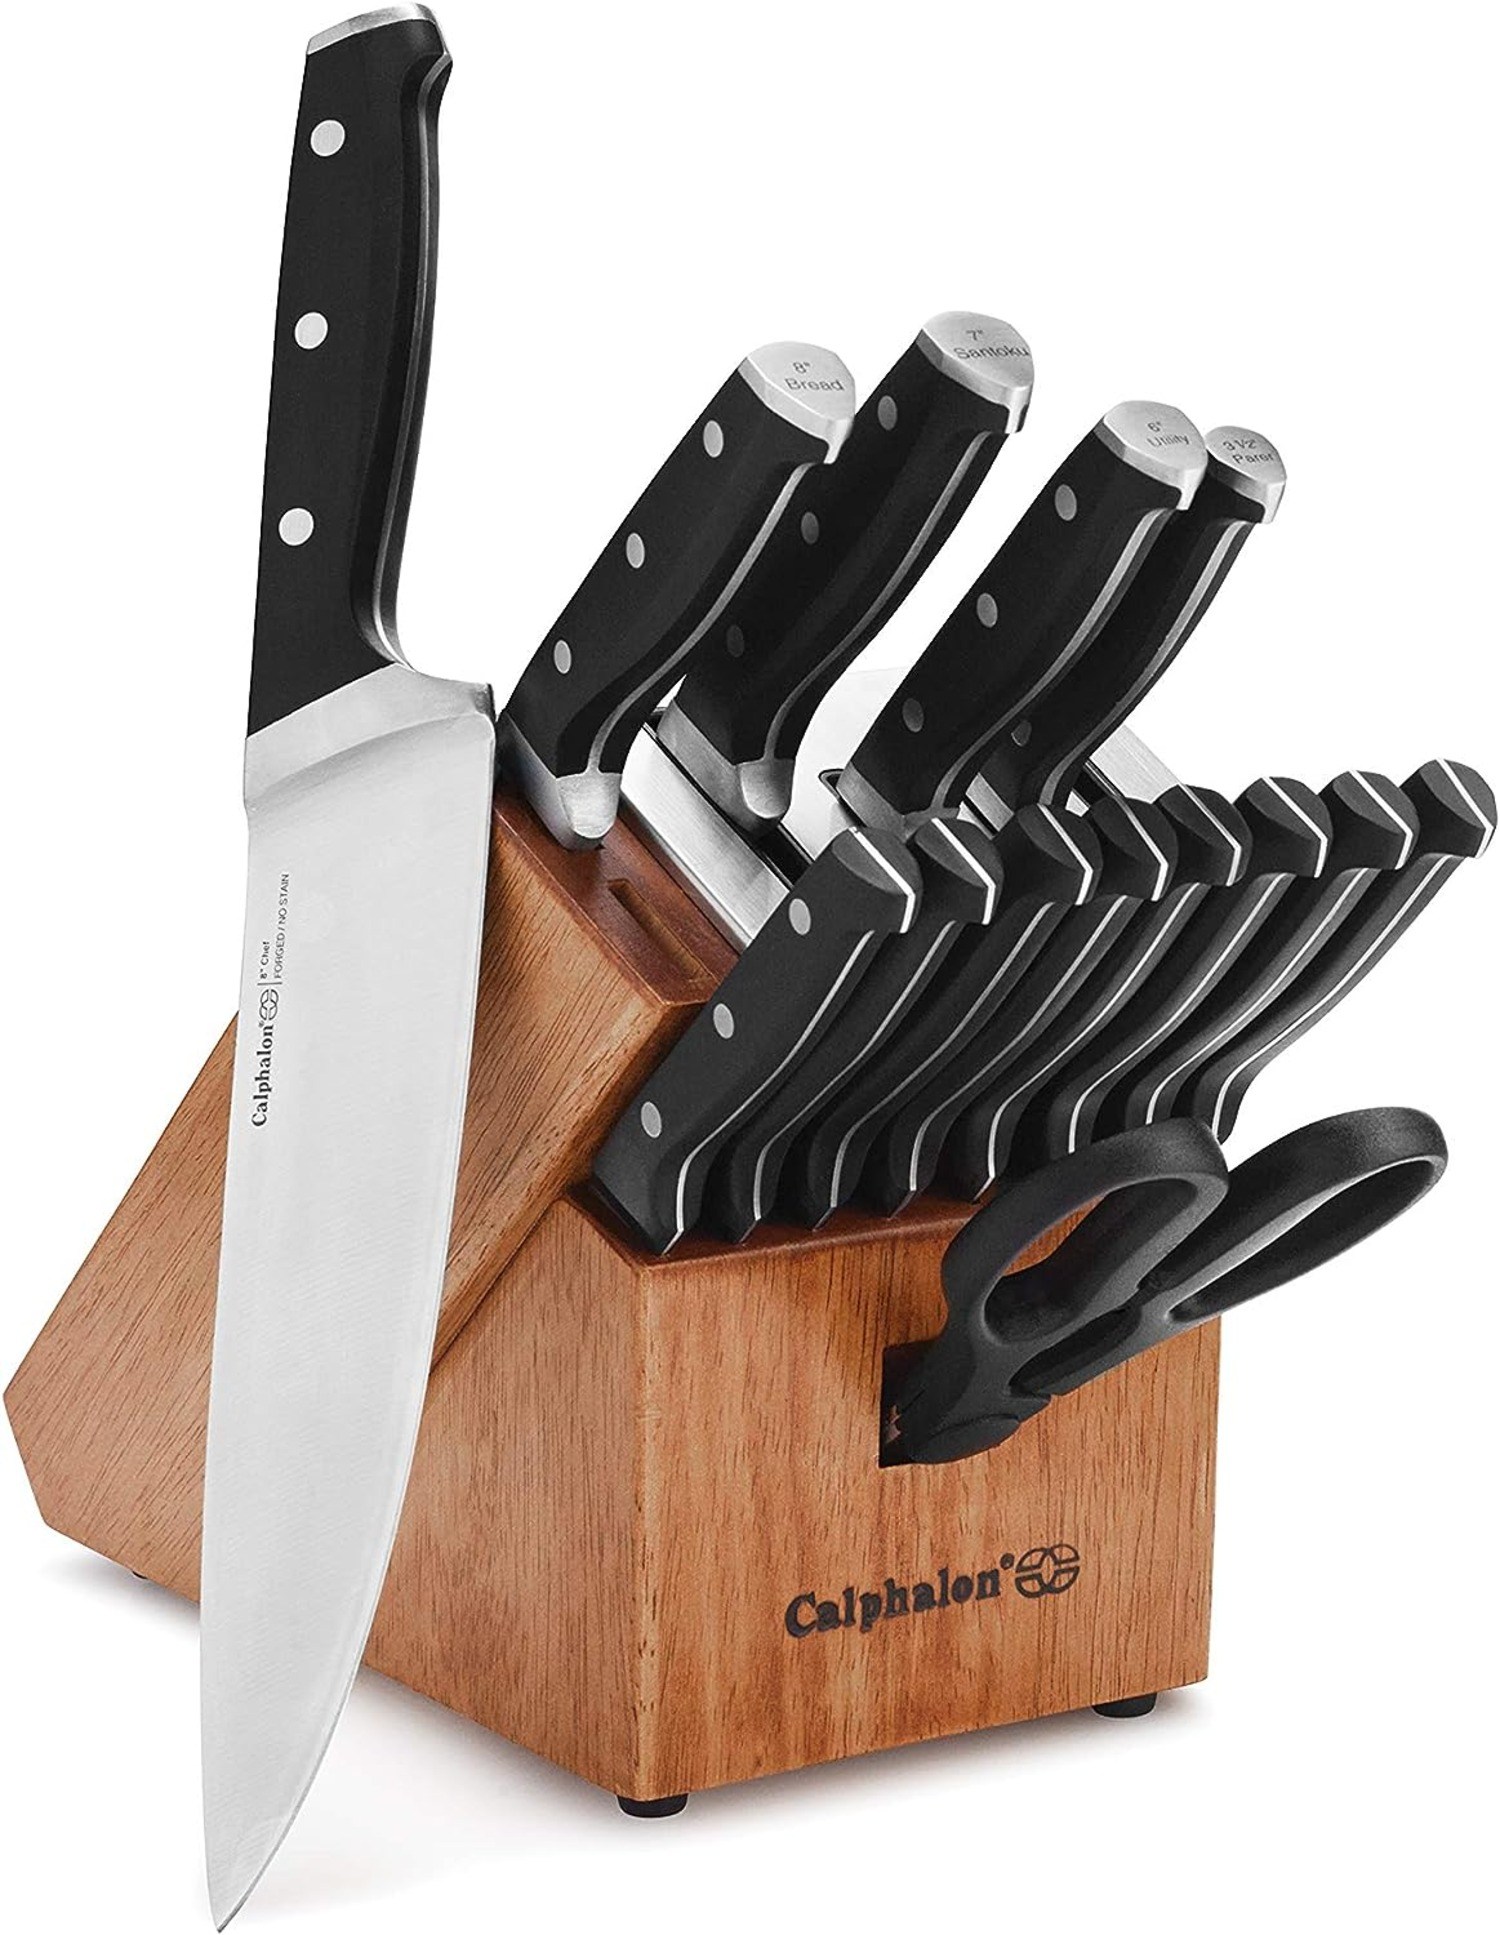 https://cdn.bestreviews.com/images/v4desktop/product-matrix/calphalon_best-kitchen-knives.jpg